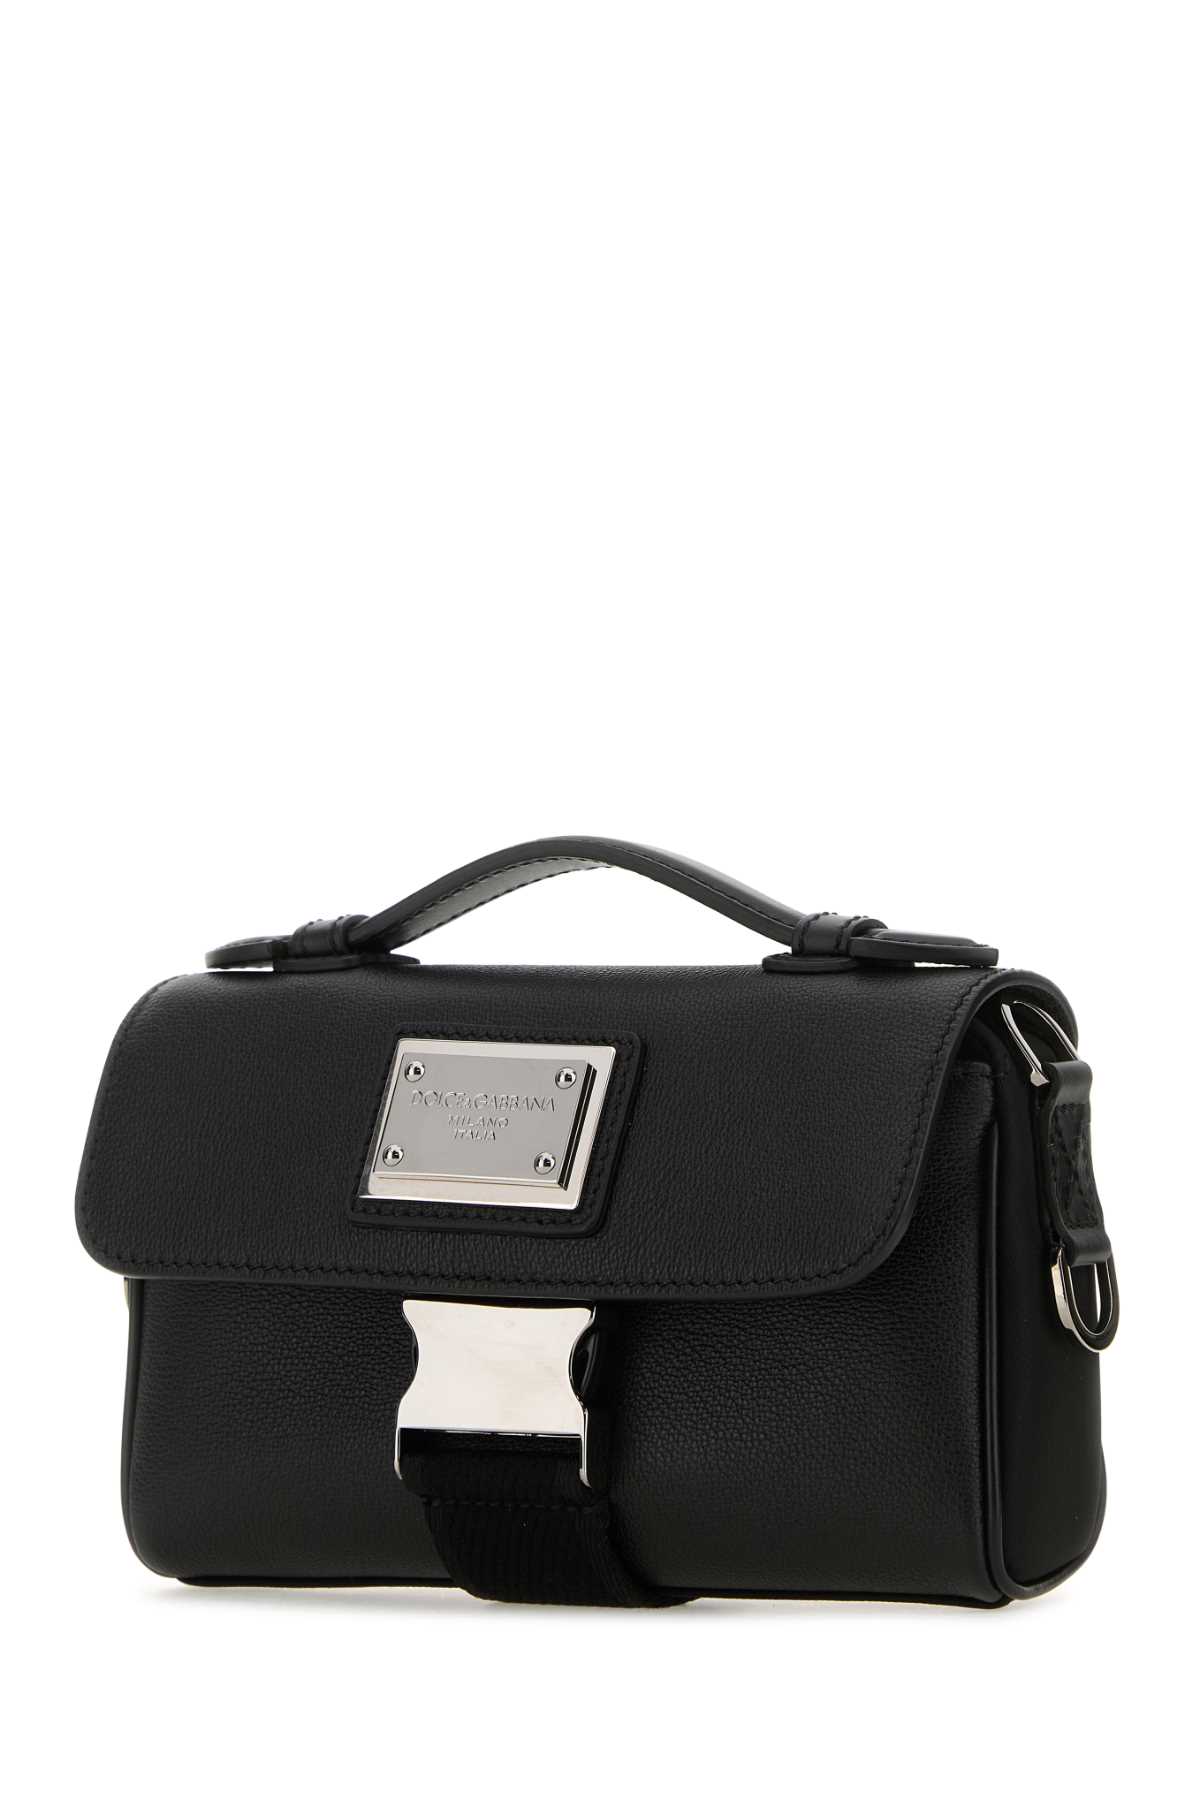 Dolce & Gabbana Black Leather Handbag In Neronero